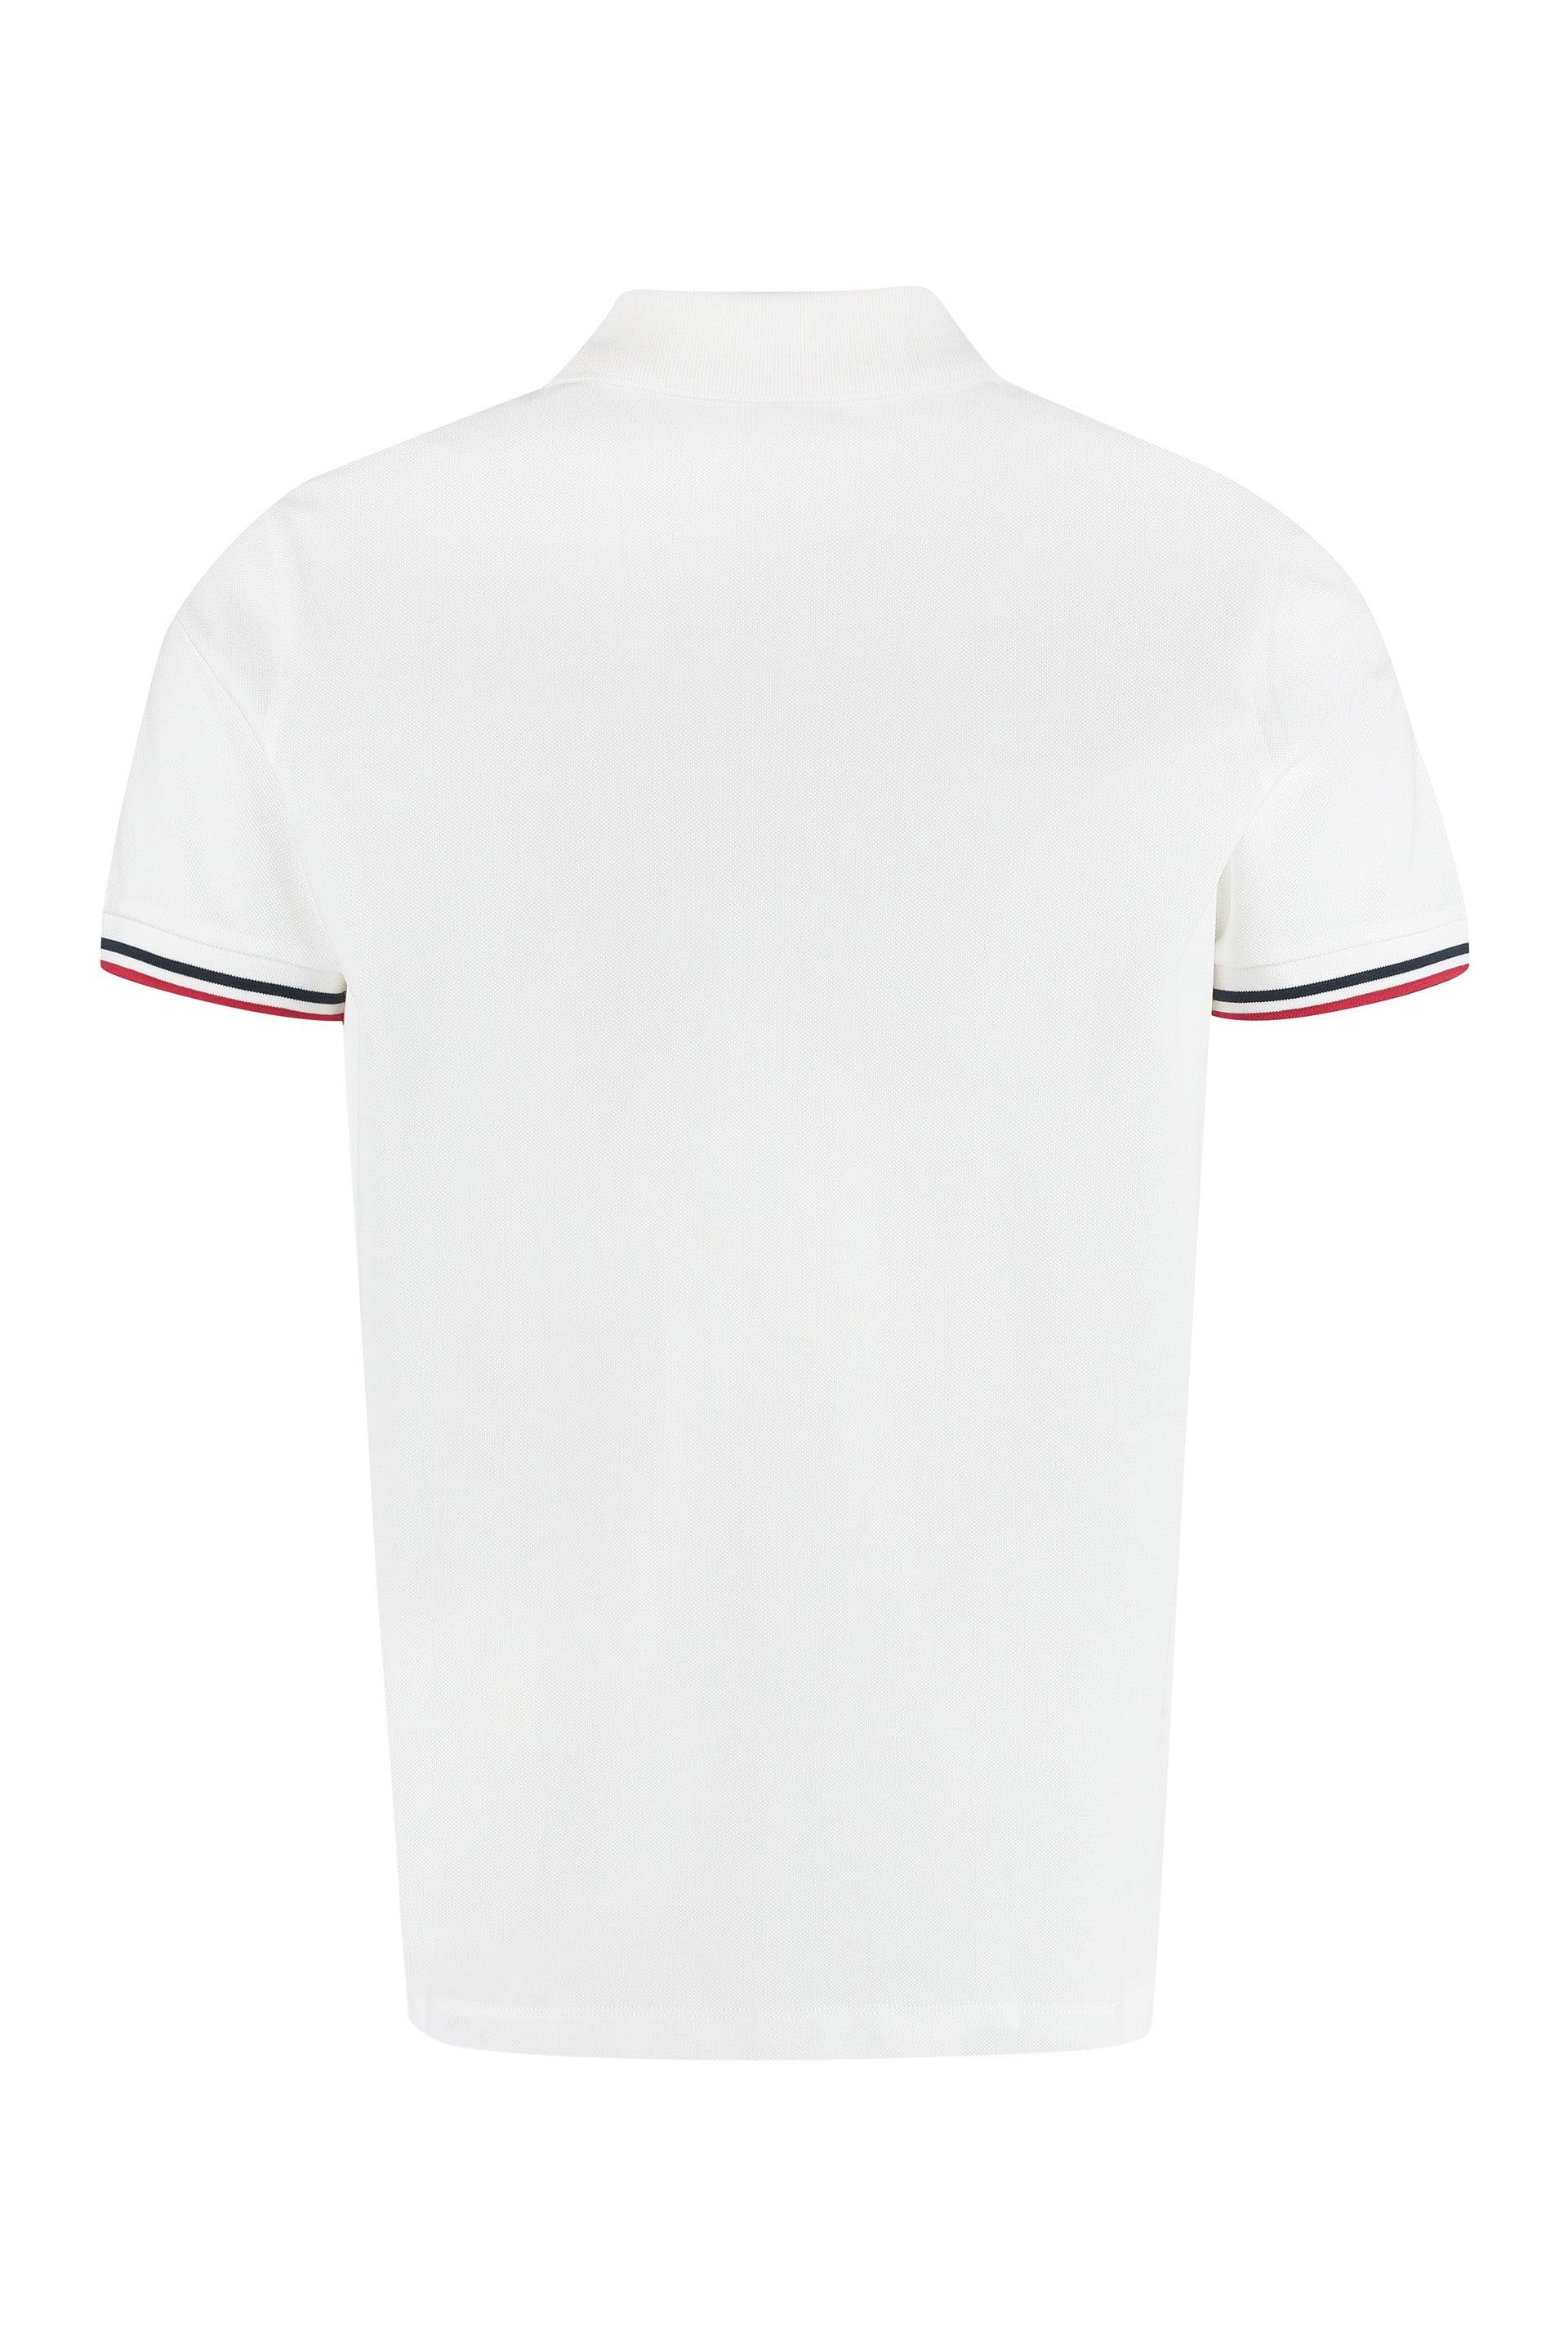 Moncler Cotton-piqué Polo Shirt in White for Men | Lyst